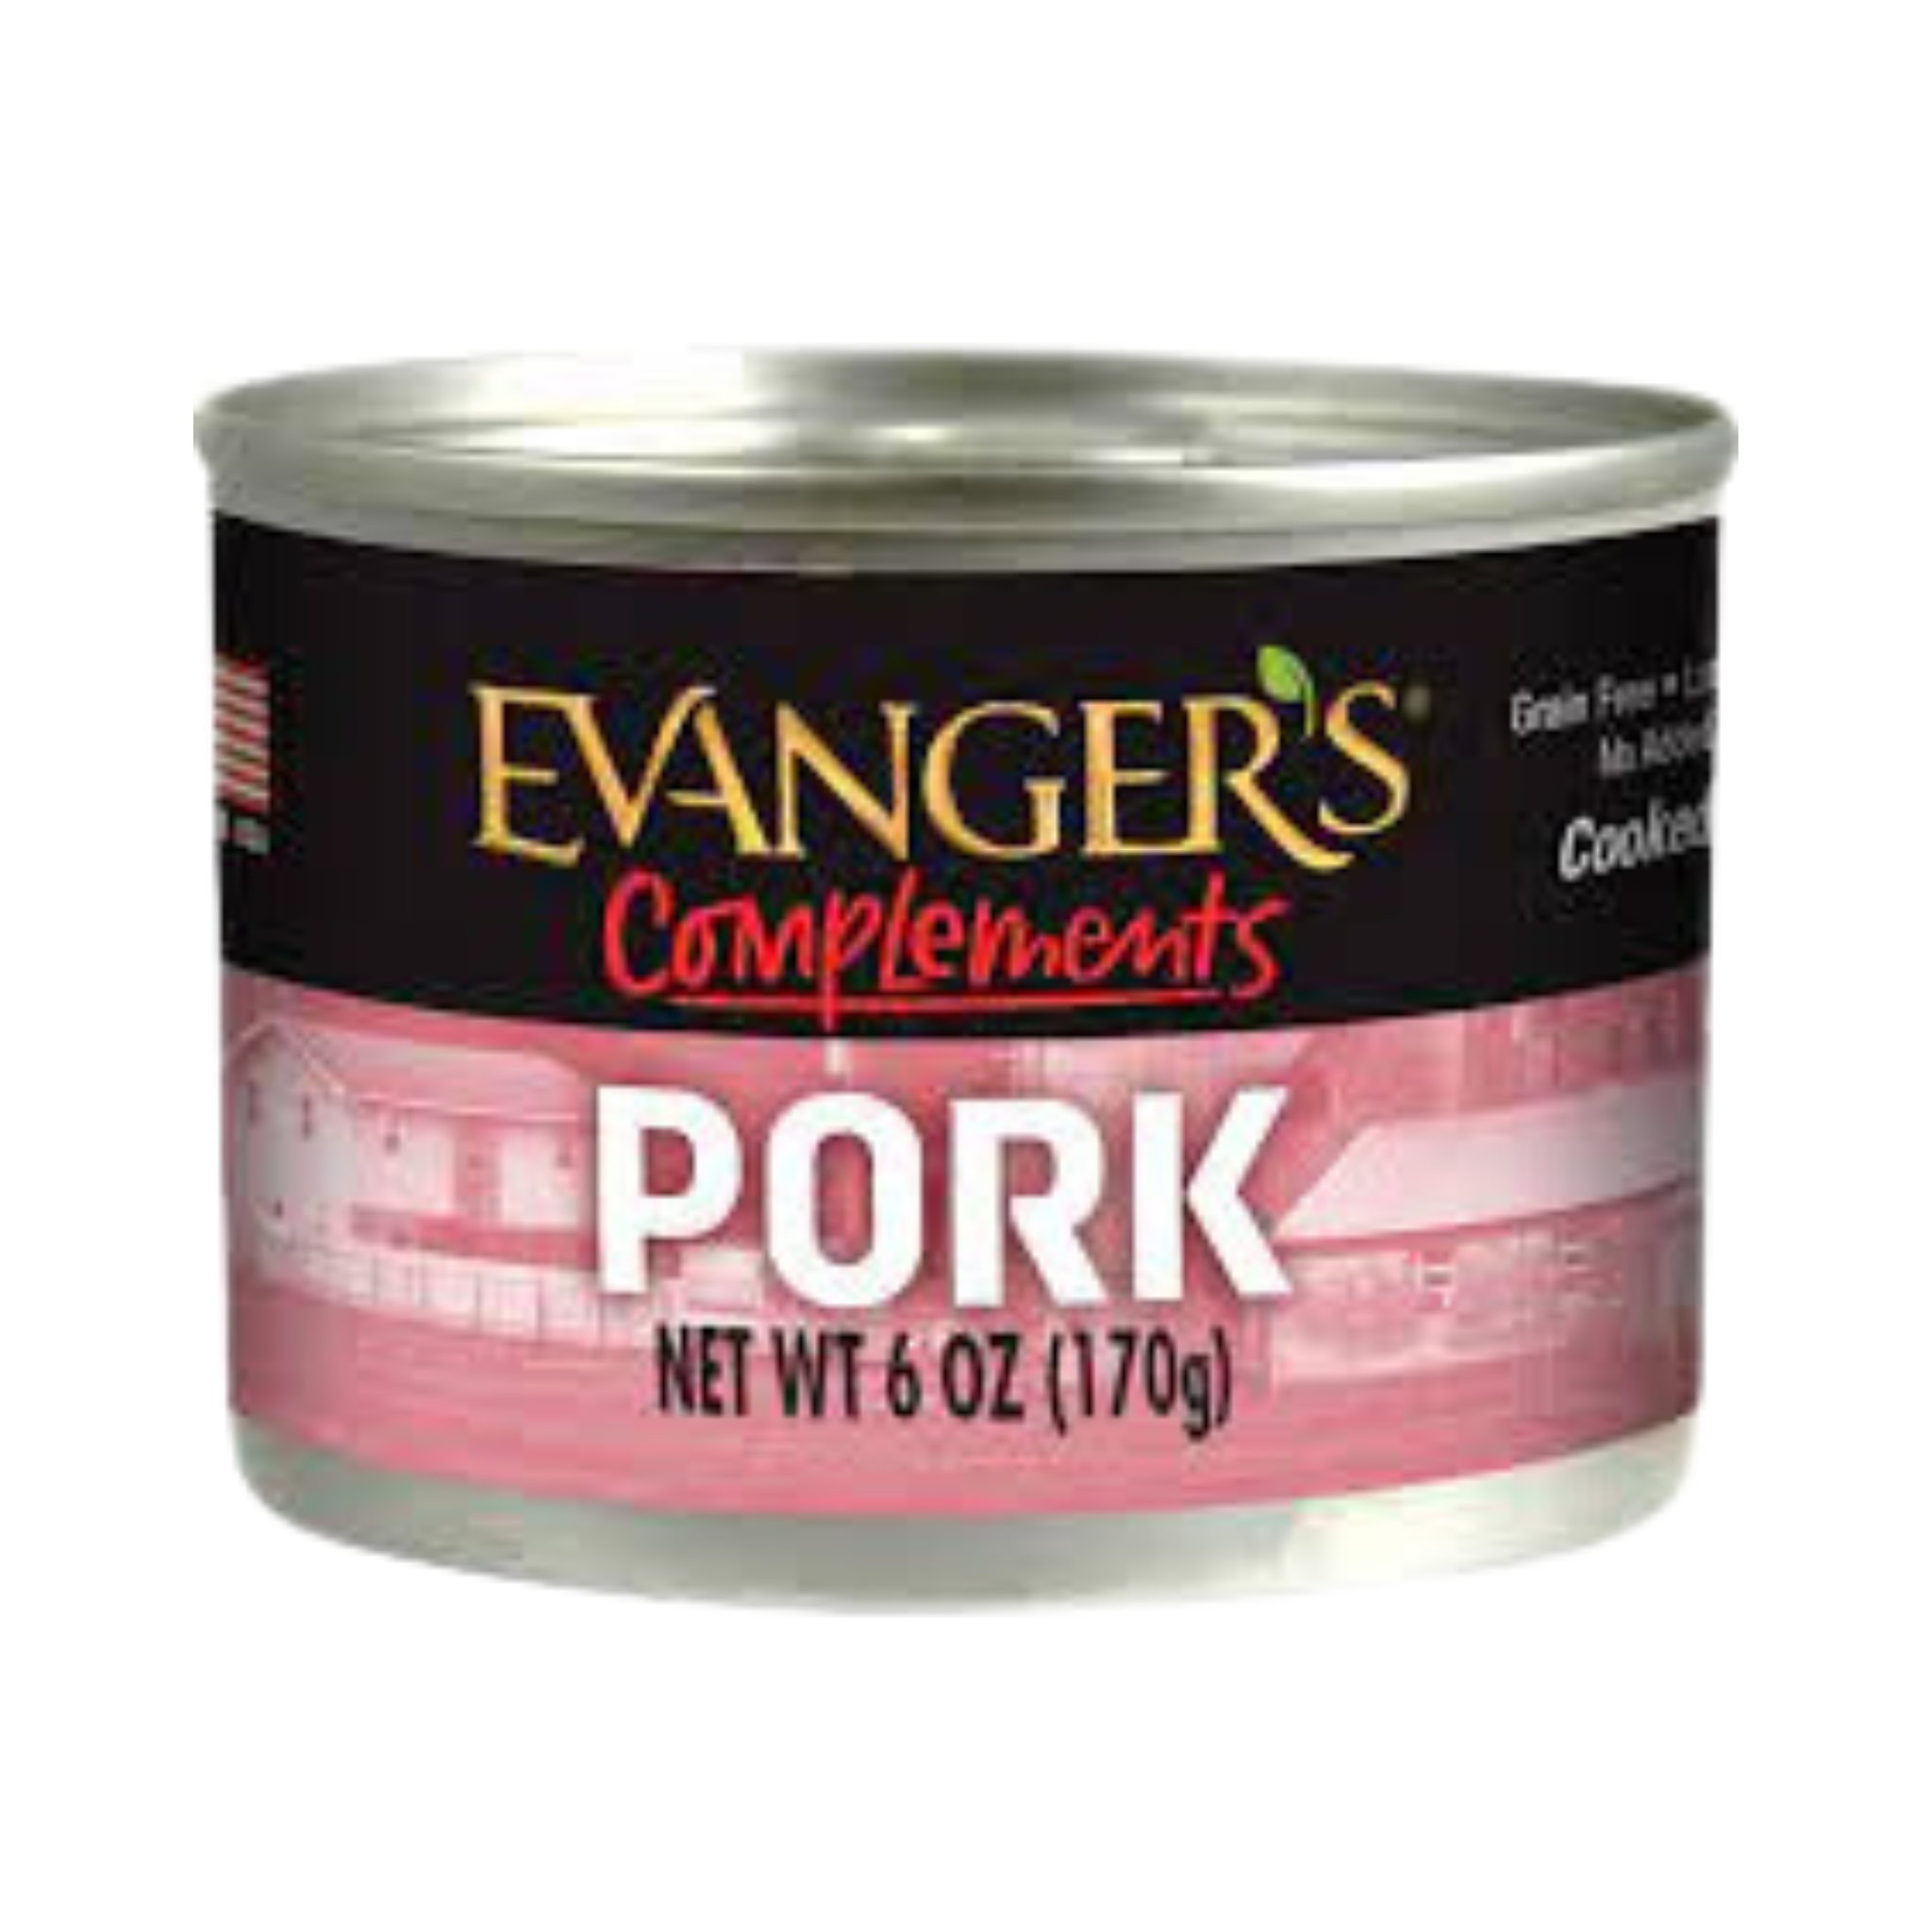 Evanger’s Pork Dog Canned